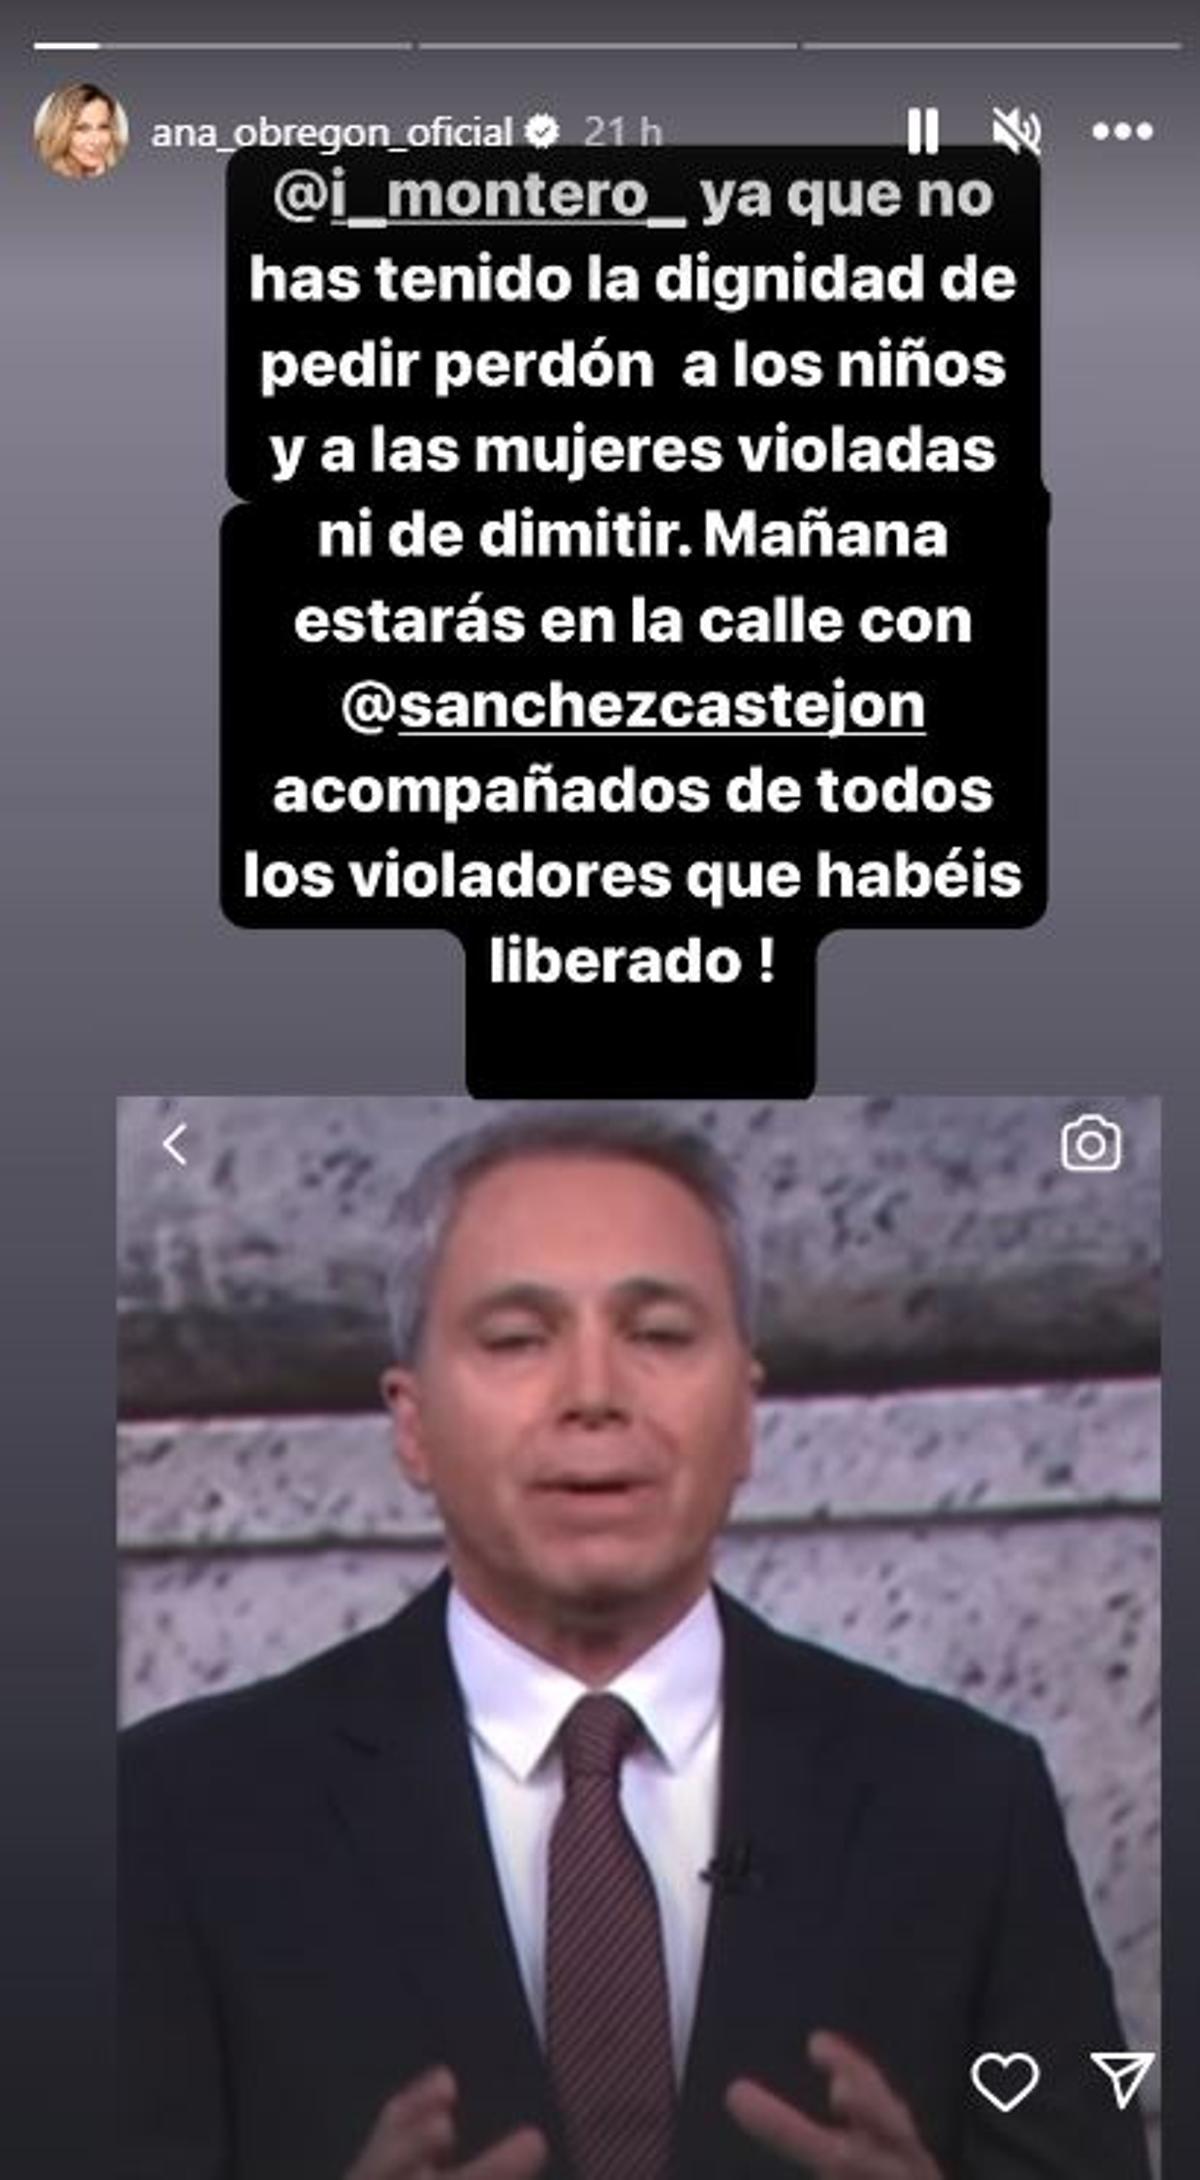 Ana Obregón insulta a Irene Montero en Instagram